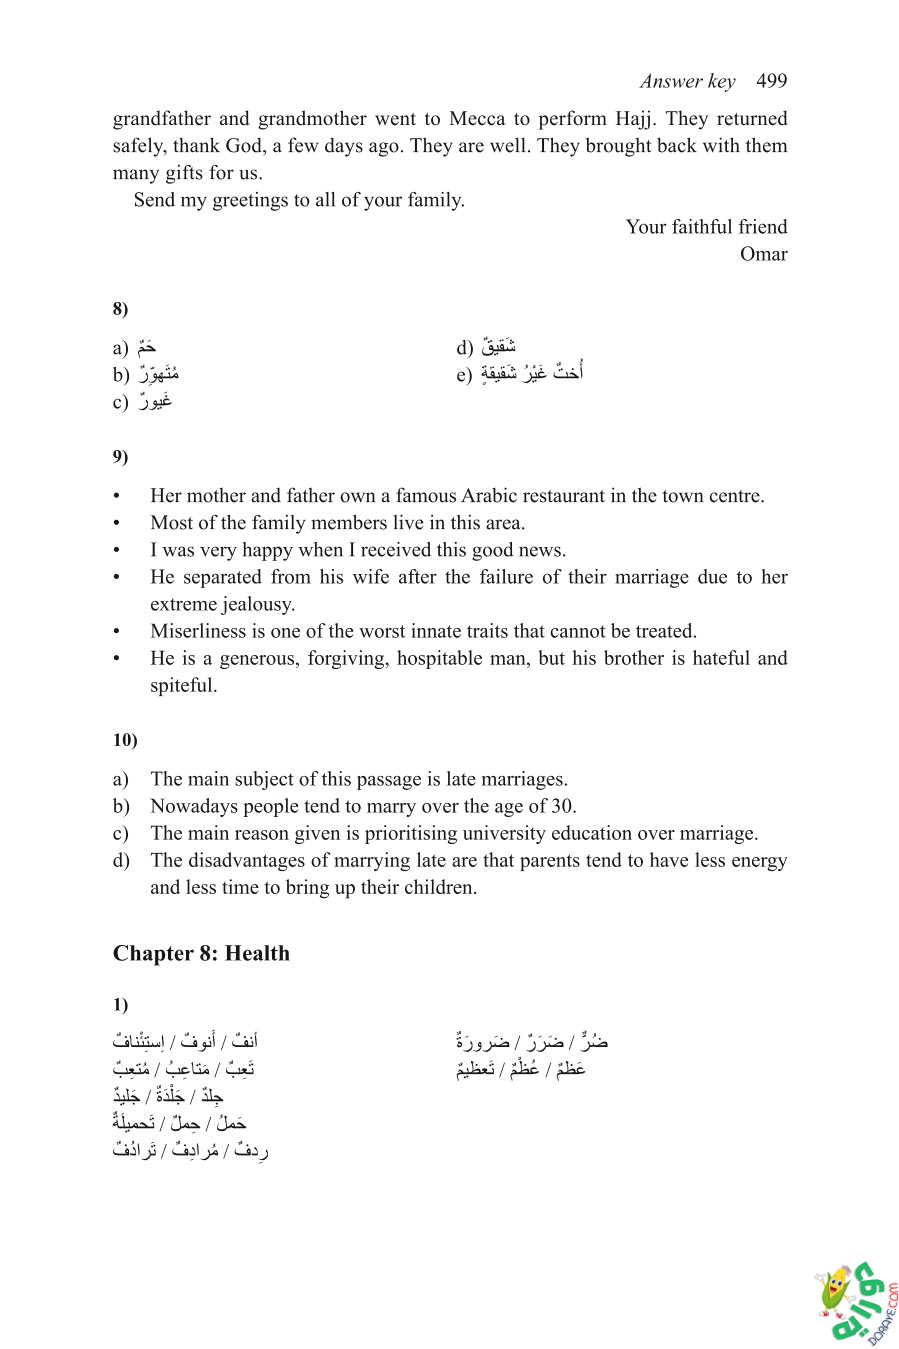 Mastering Arabic Vocabulary For Intermediate to Advanced Learners of Modern Standard Arabic 508 - Mastering Arabic-Vocabulary For Intermediate to Advanced Learners of Modern Standard Arabic